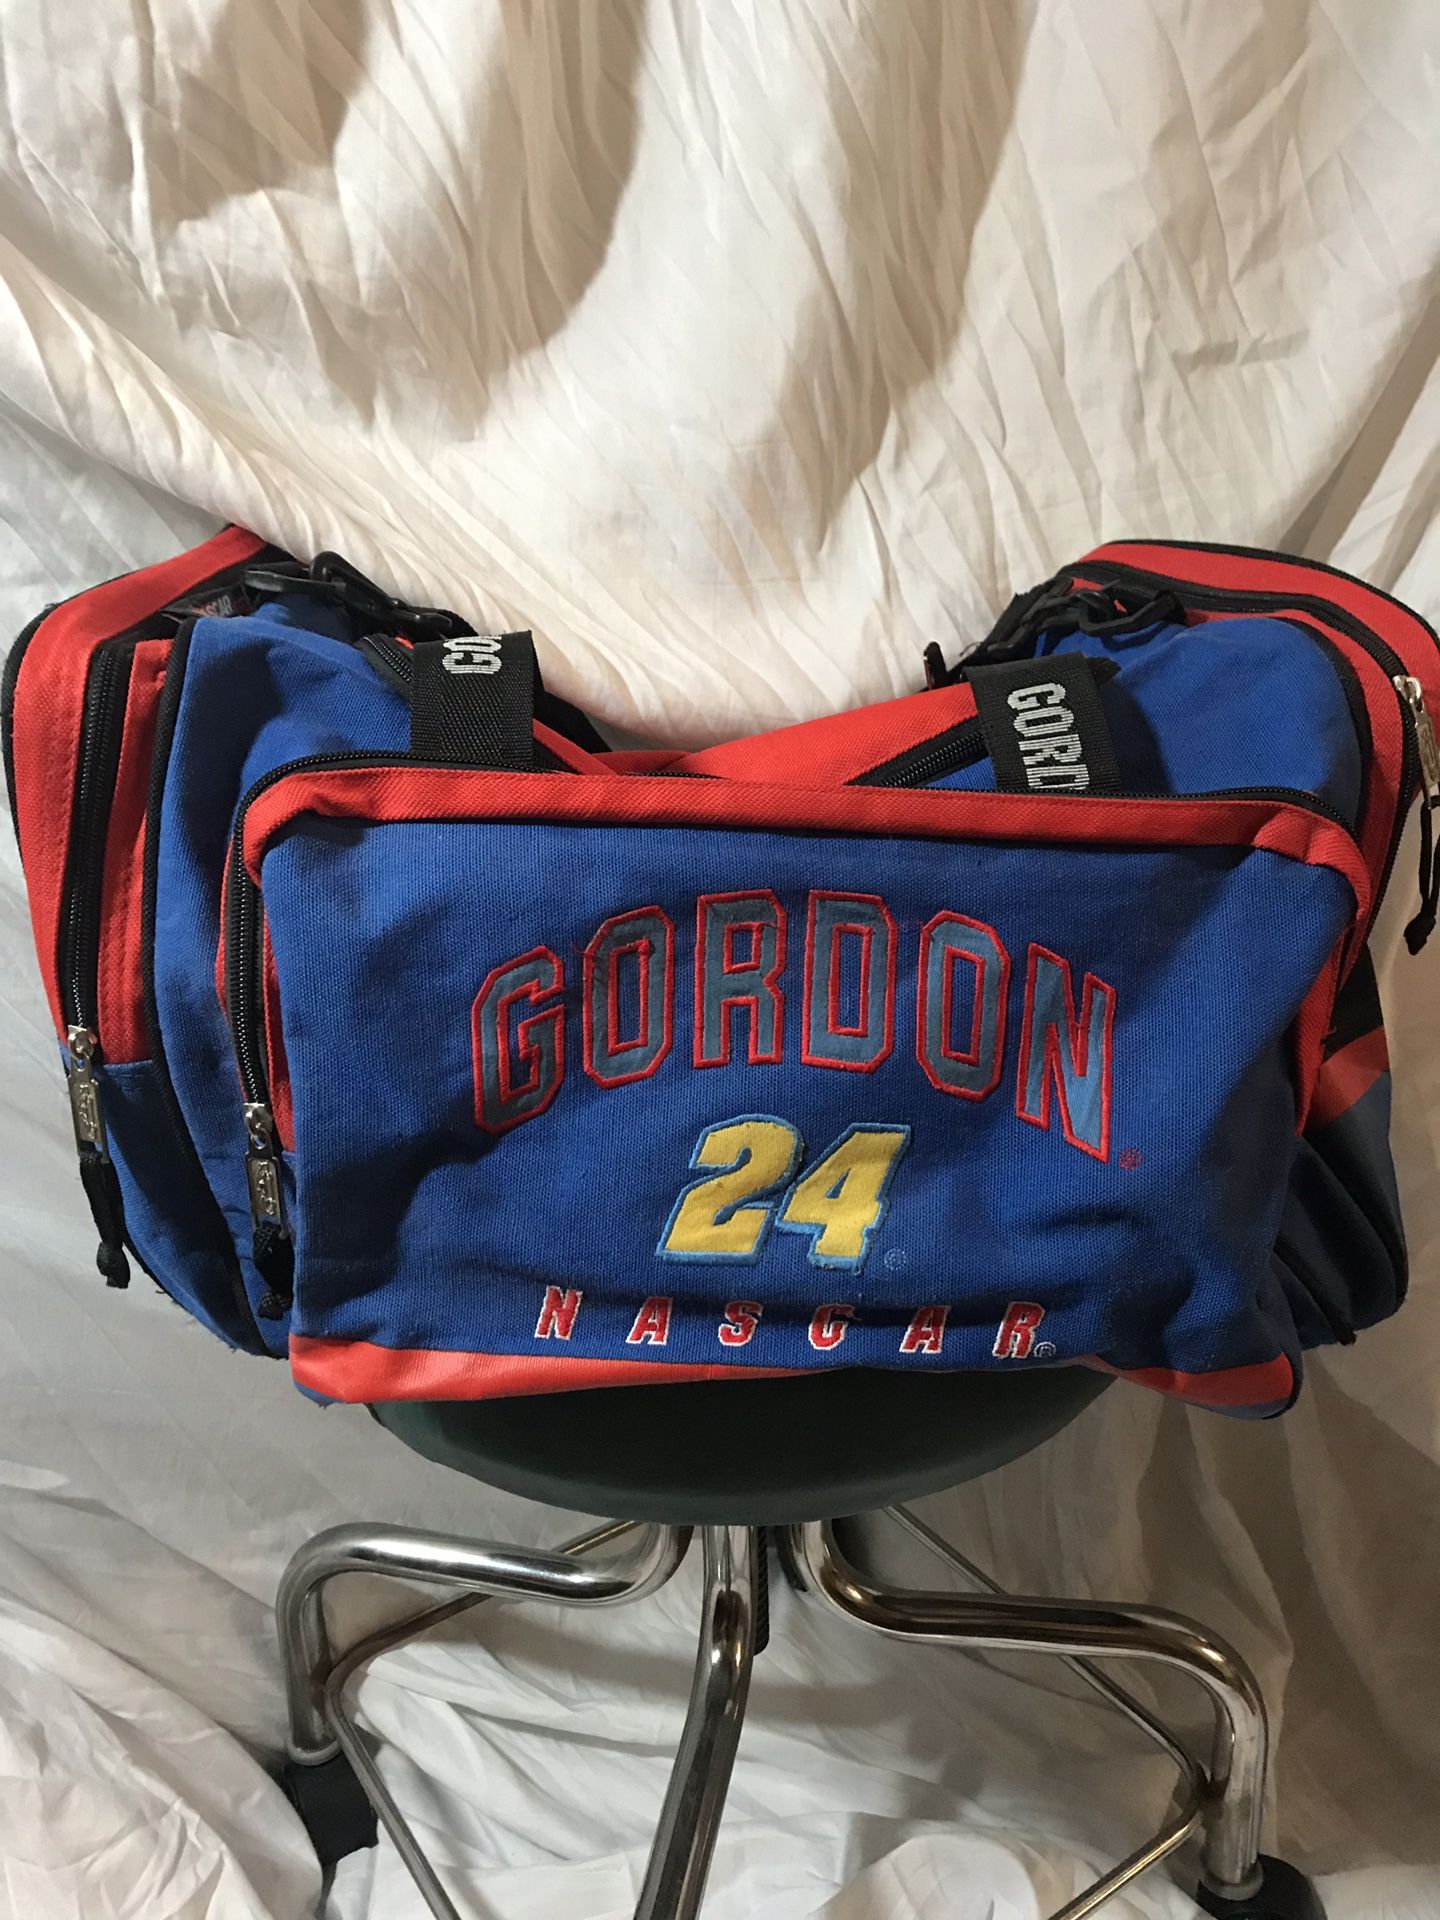 Vintage Jeff Gordon Duffle Bag